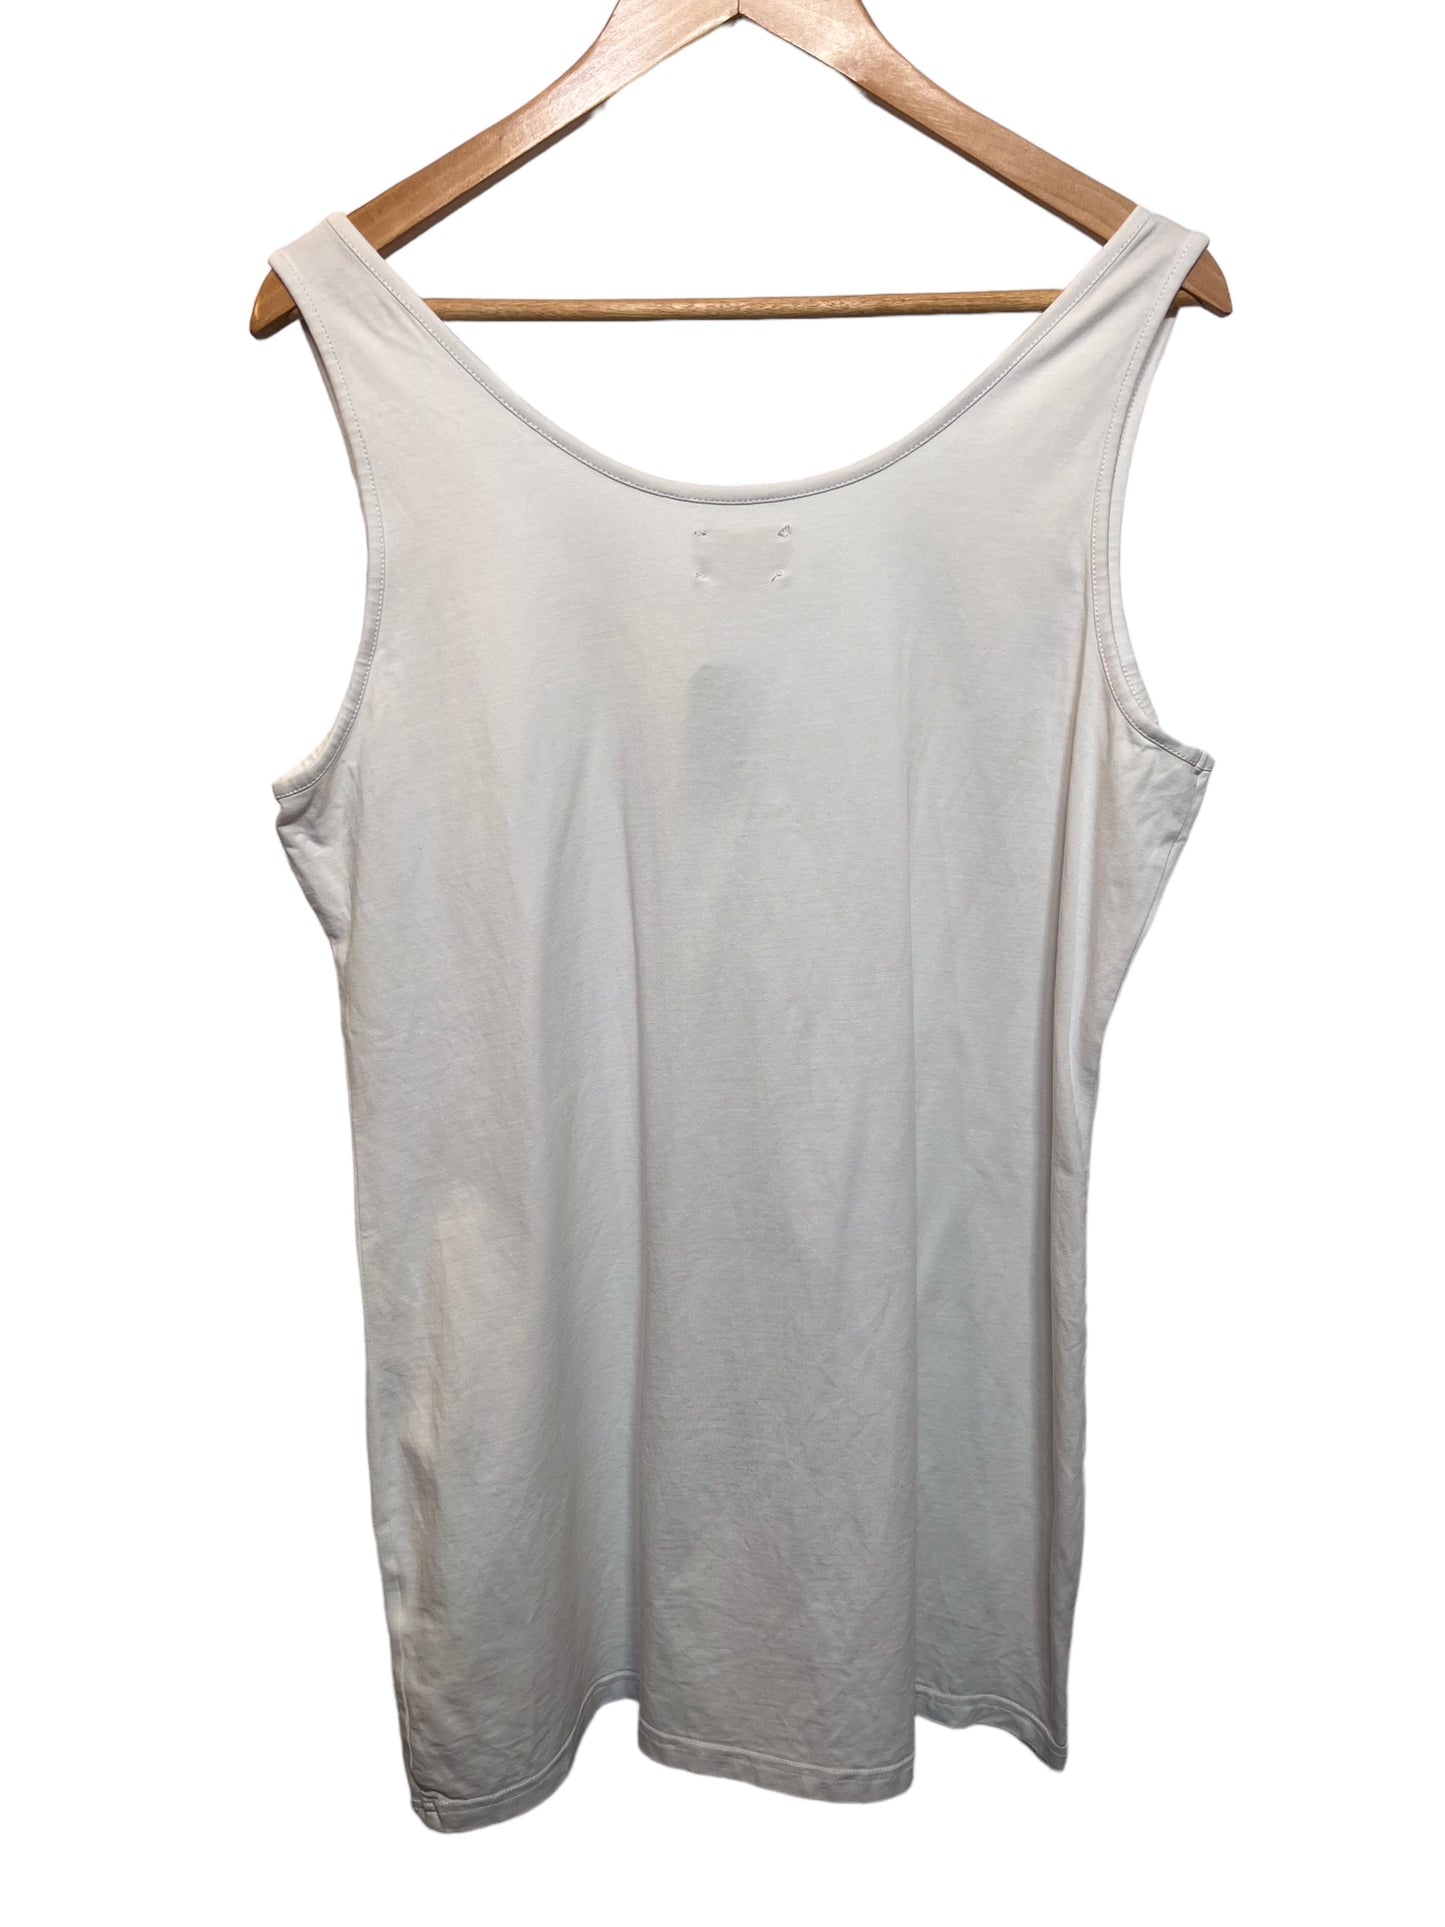 Women’s White Lounge Vest (Size XL)